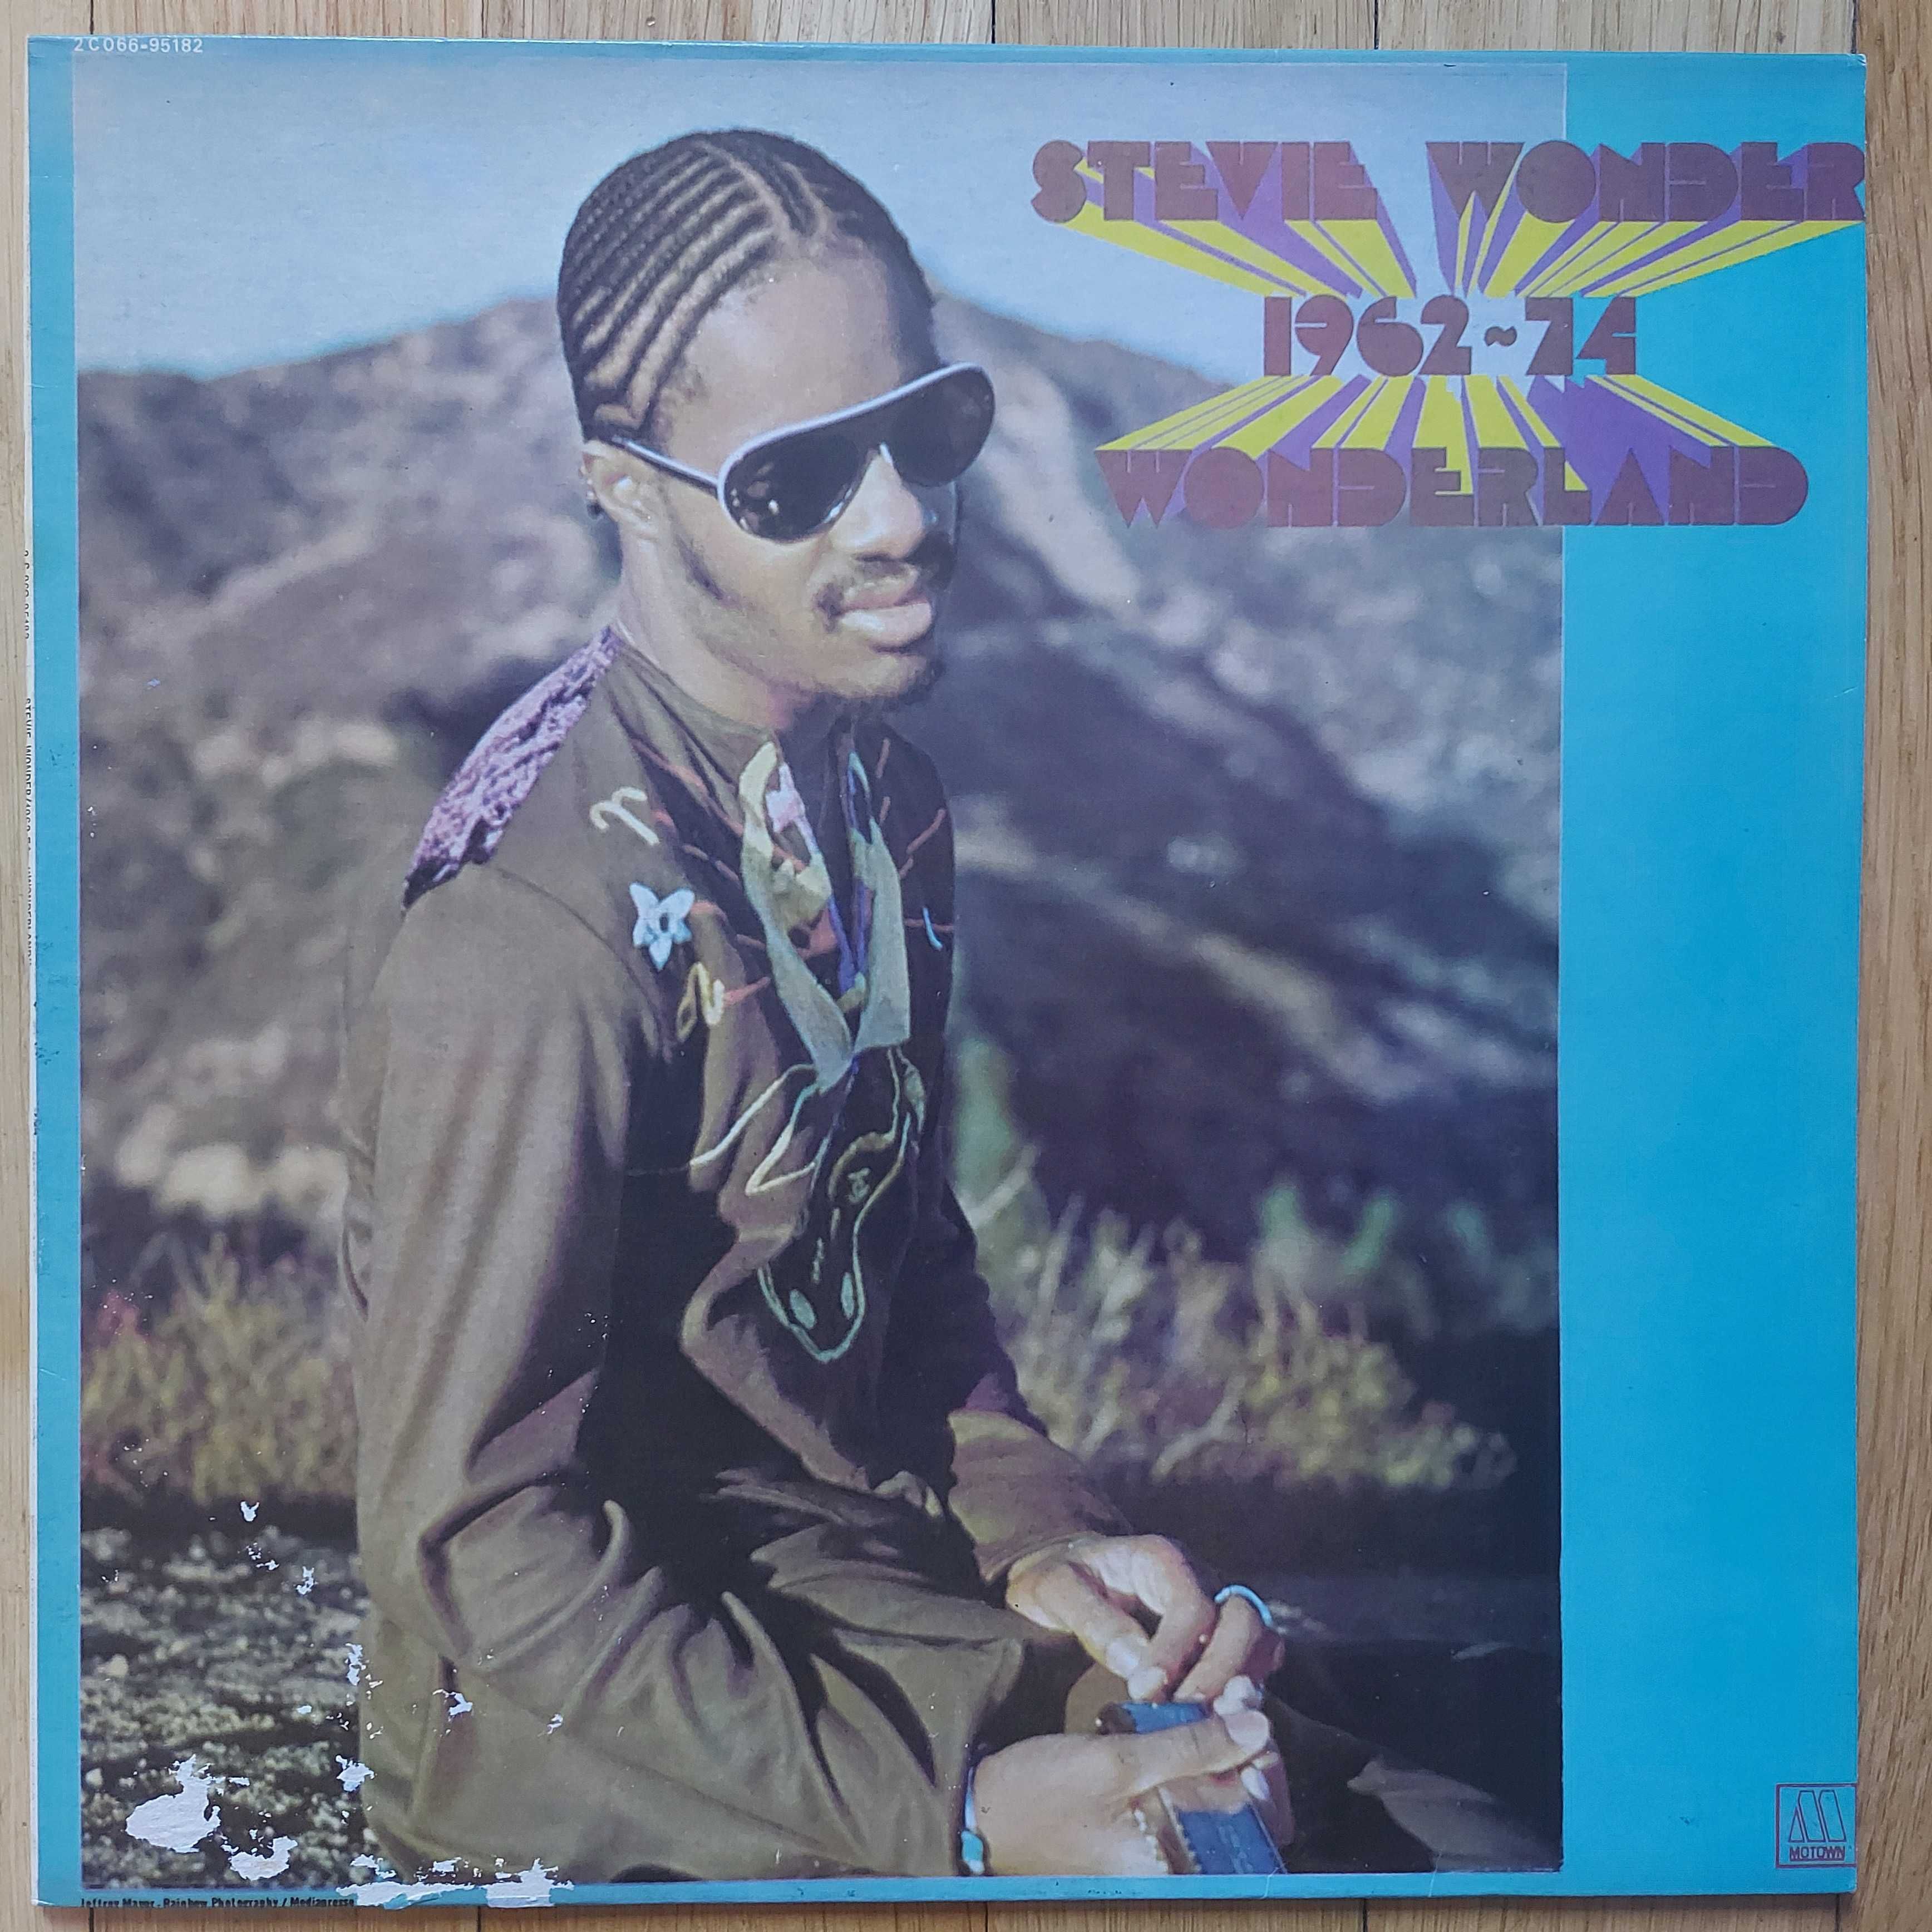 Stevie Wonder ‎1962 - 74 Wonderland FR 1978 (NM-/VG+)